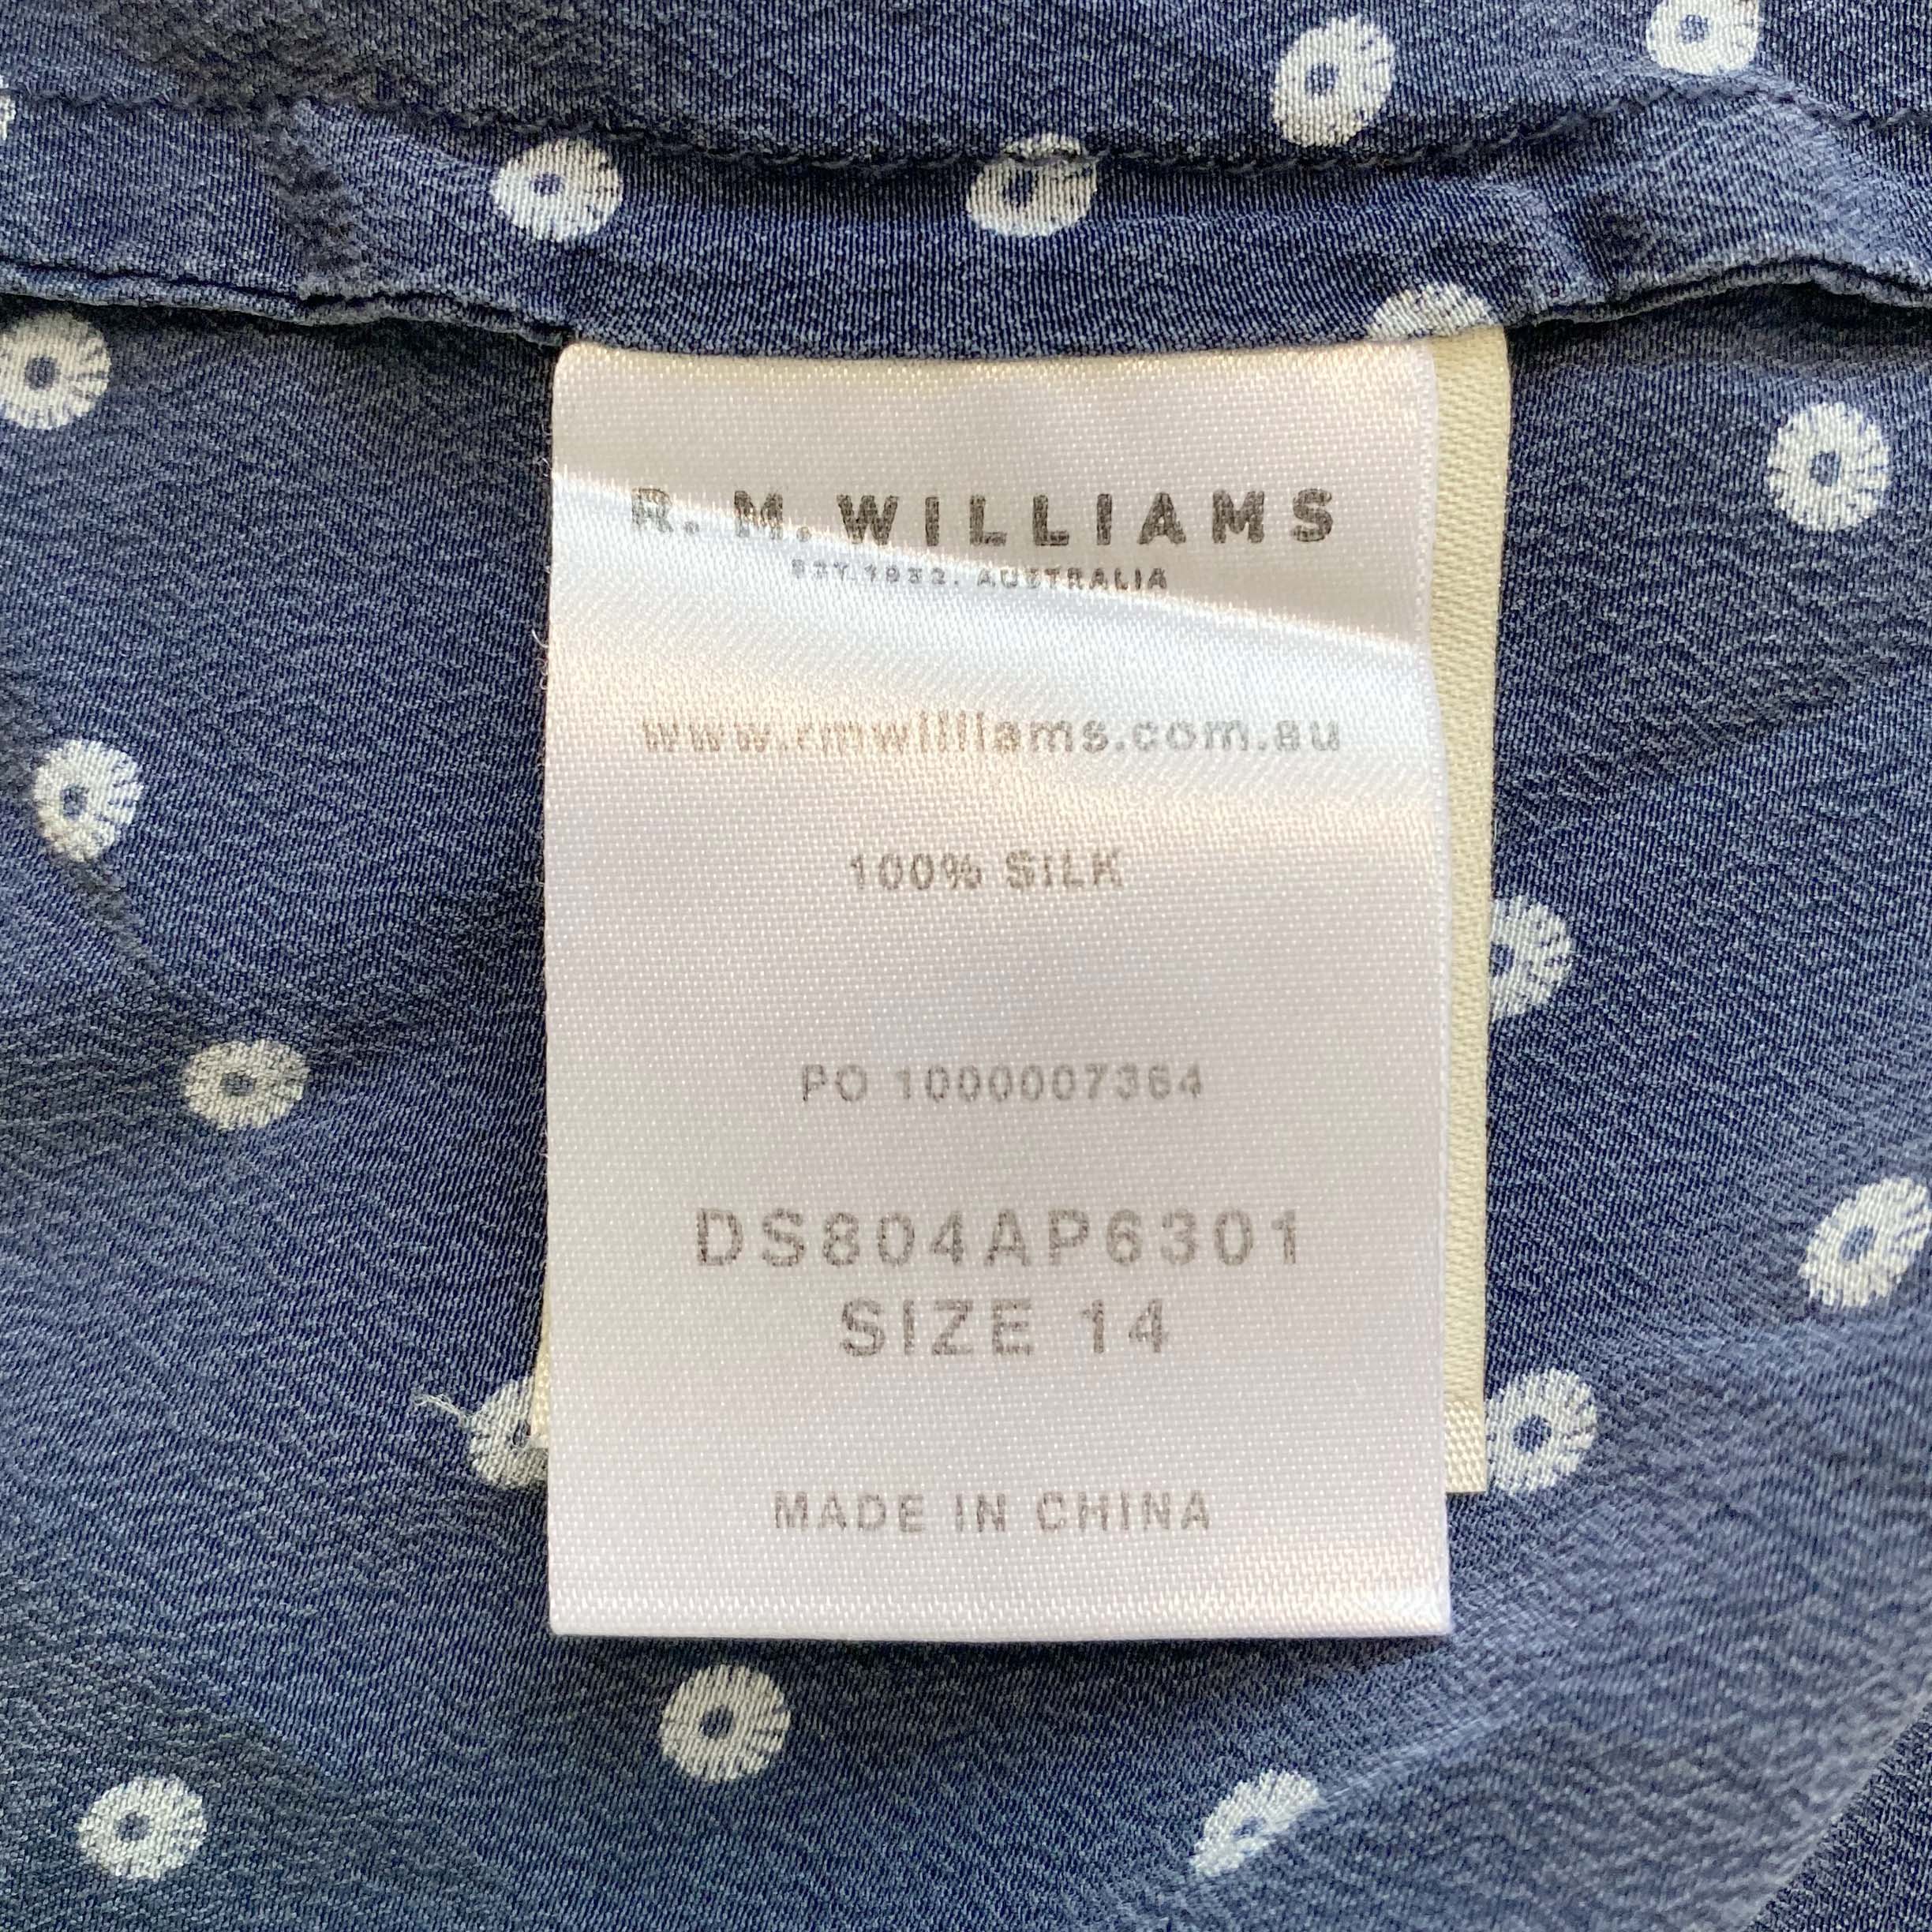 R.M WILLAMS Navy Blue Dress